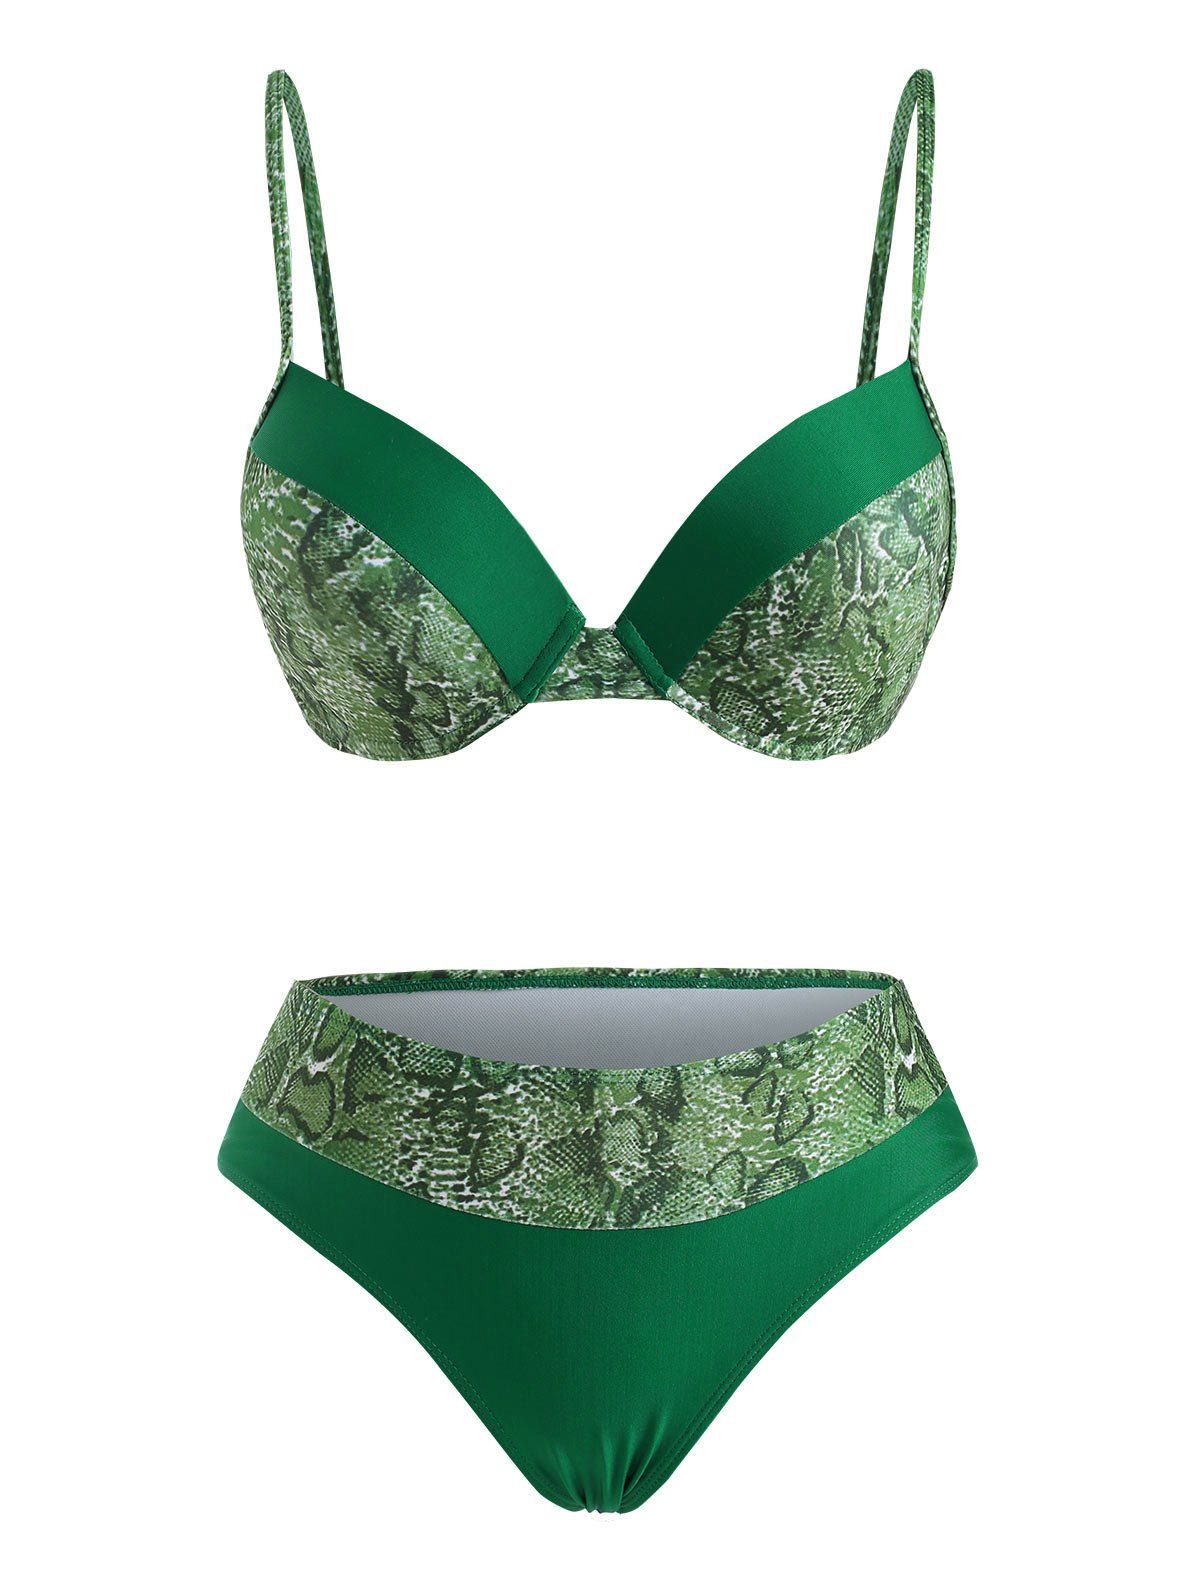 Snakeskin Underwire Colorblock Bikini Swimwear - LIGHT GREEN S